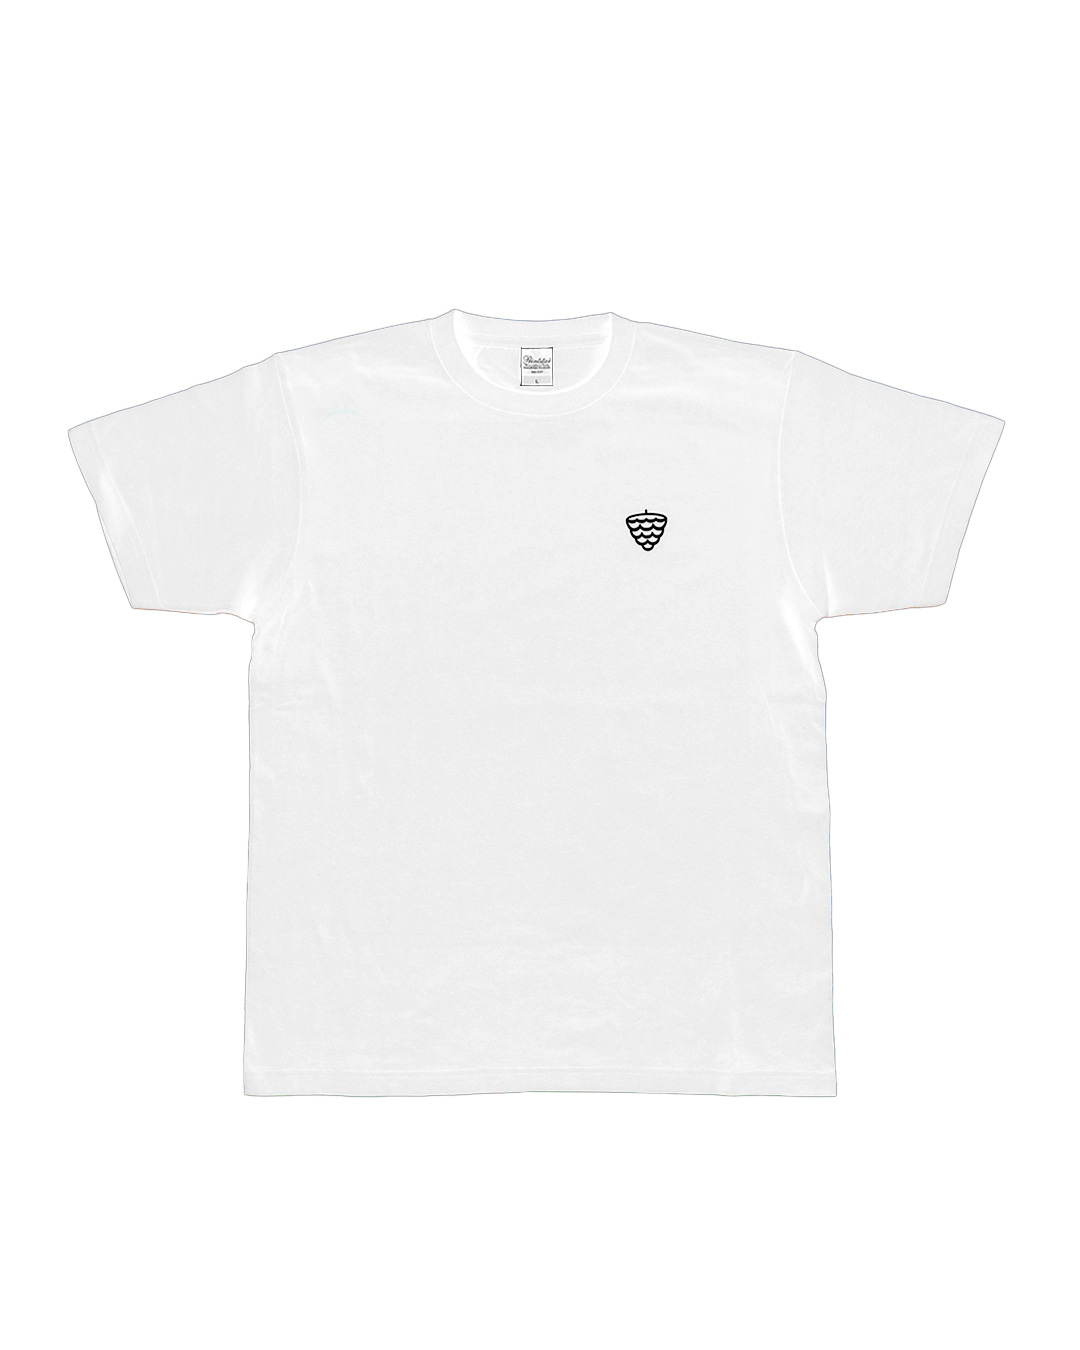 Pineconelab T-Shirts White